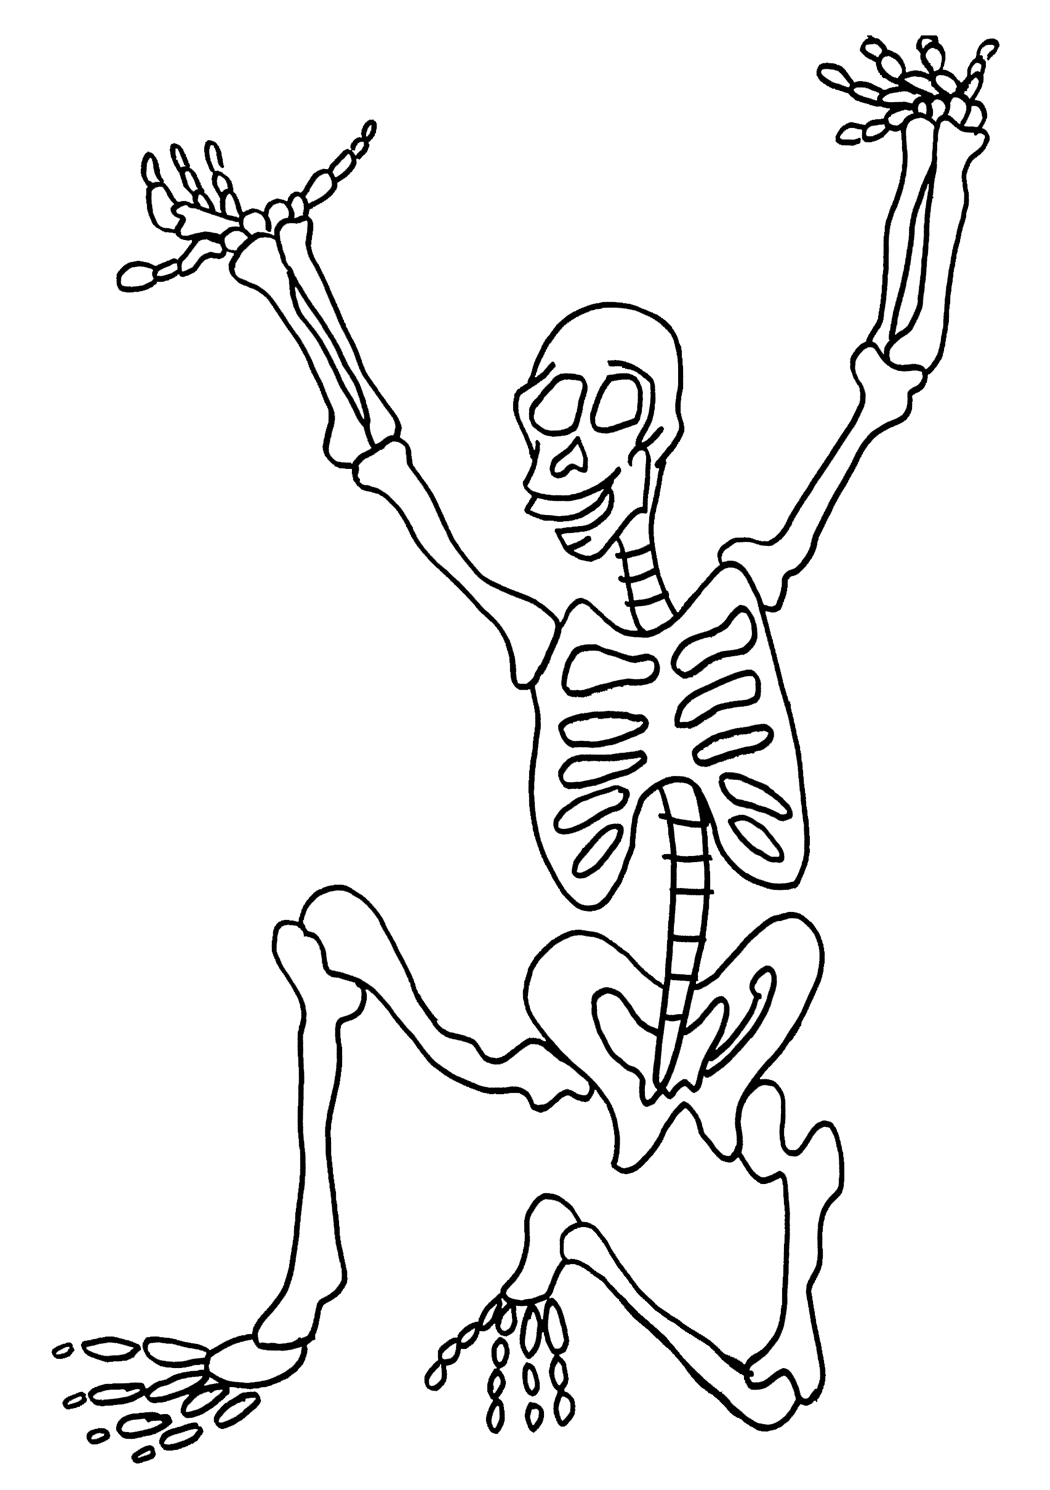 Skeleton Coloring Pages for Kids Skeleton1 Printable 2021 607 Coloring4free